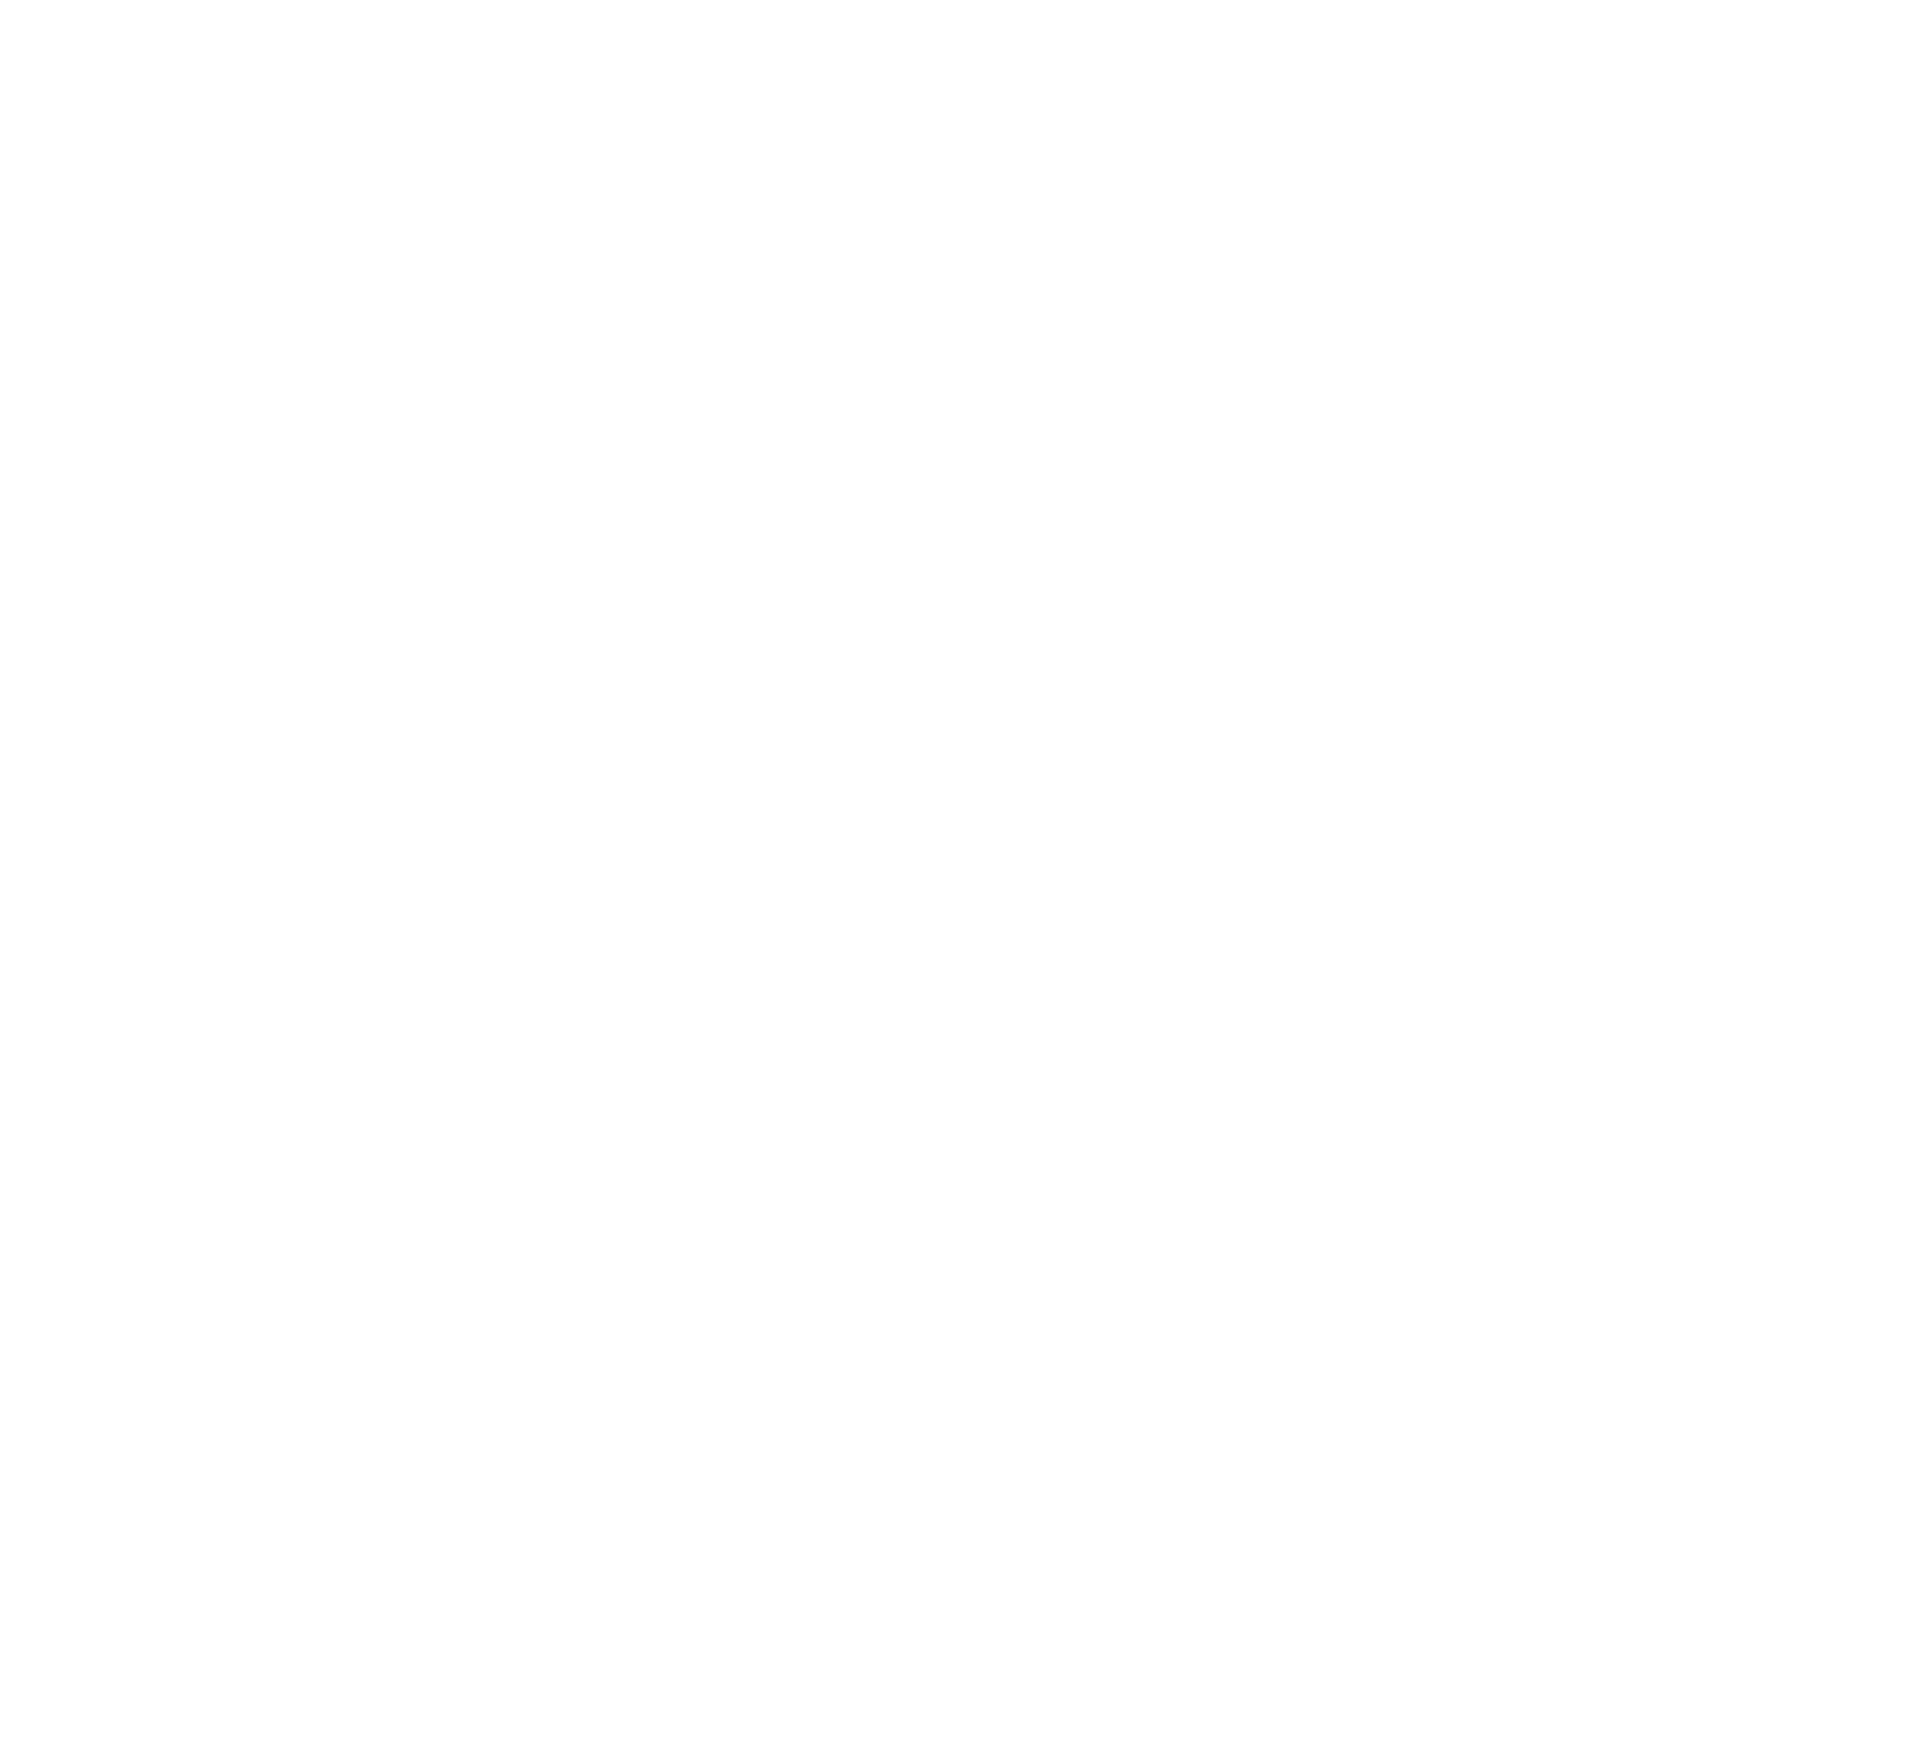 Lilac Run logo